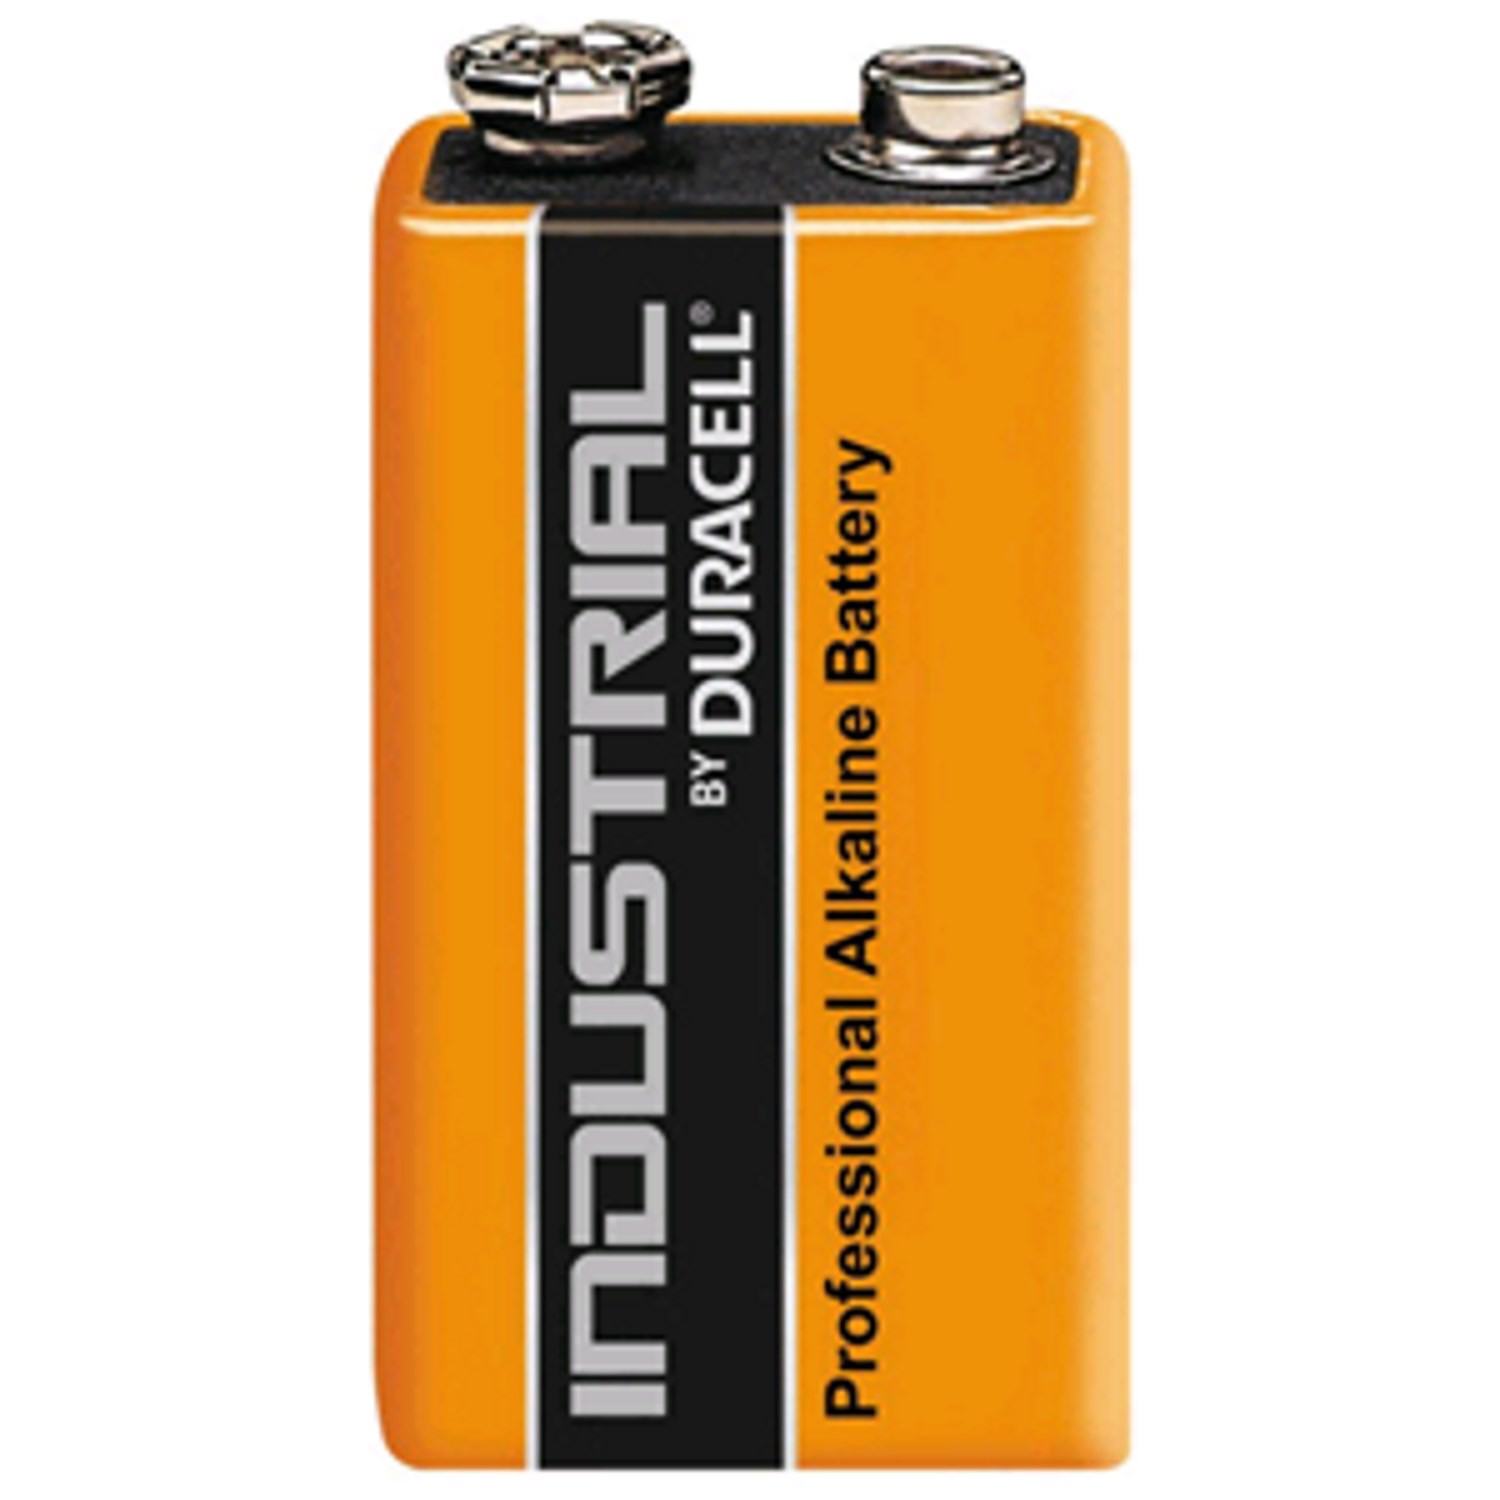 MN1604 Duracell Industrial Alkaline Transistor Batterie Größe 9